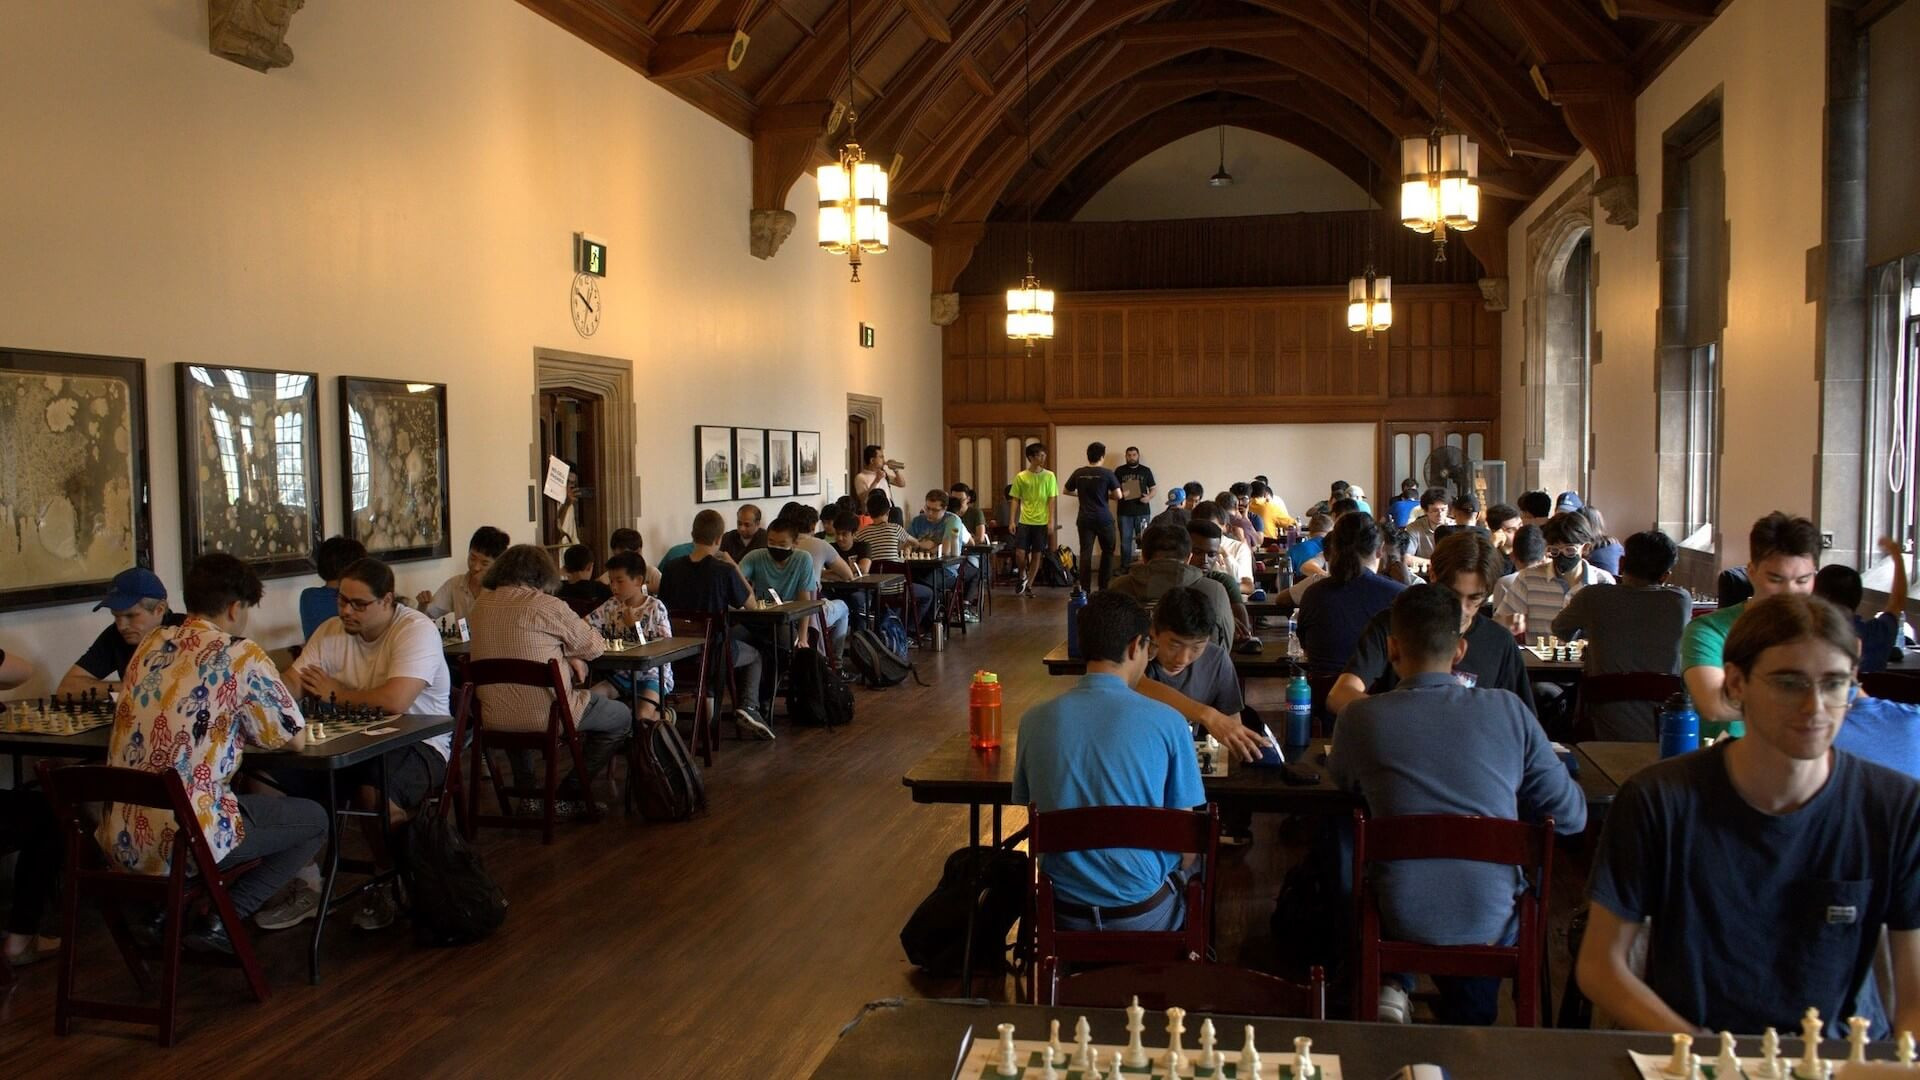 Canadian Open Chess Championship descends on Hamilton